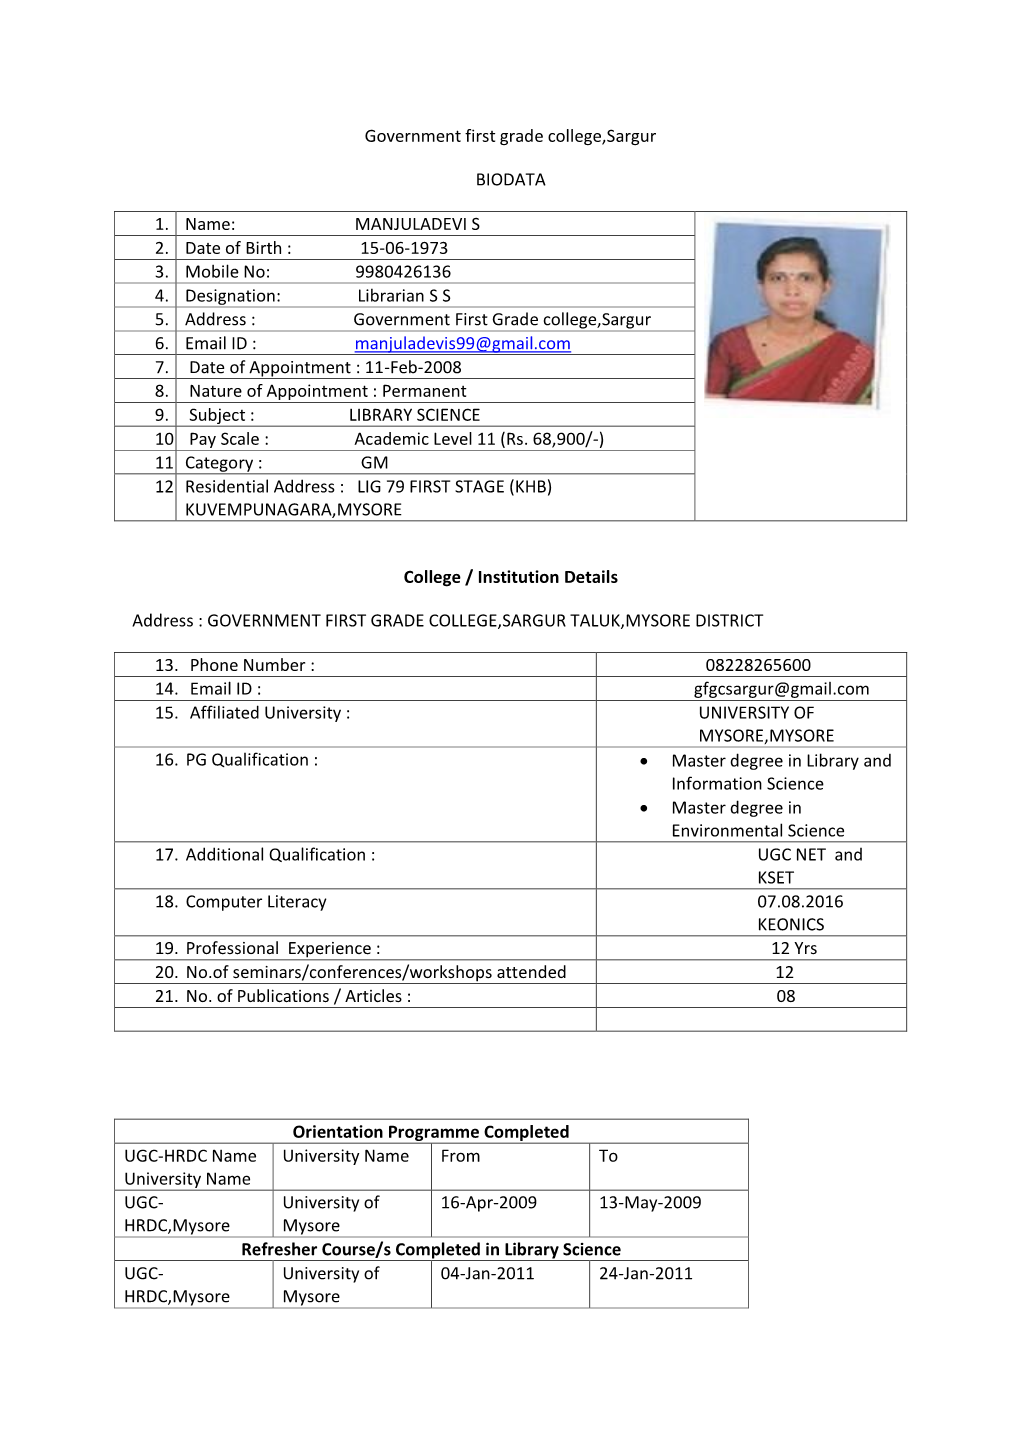 Government First Grade College,Sargur BIODATA 1. Name: MANJULADEVI S 2. Date of Birth : 15-06-1973 3. Mobile No